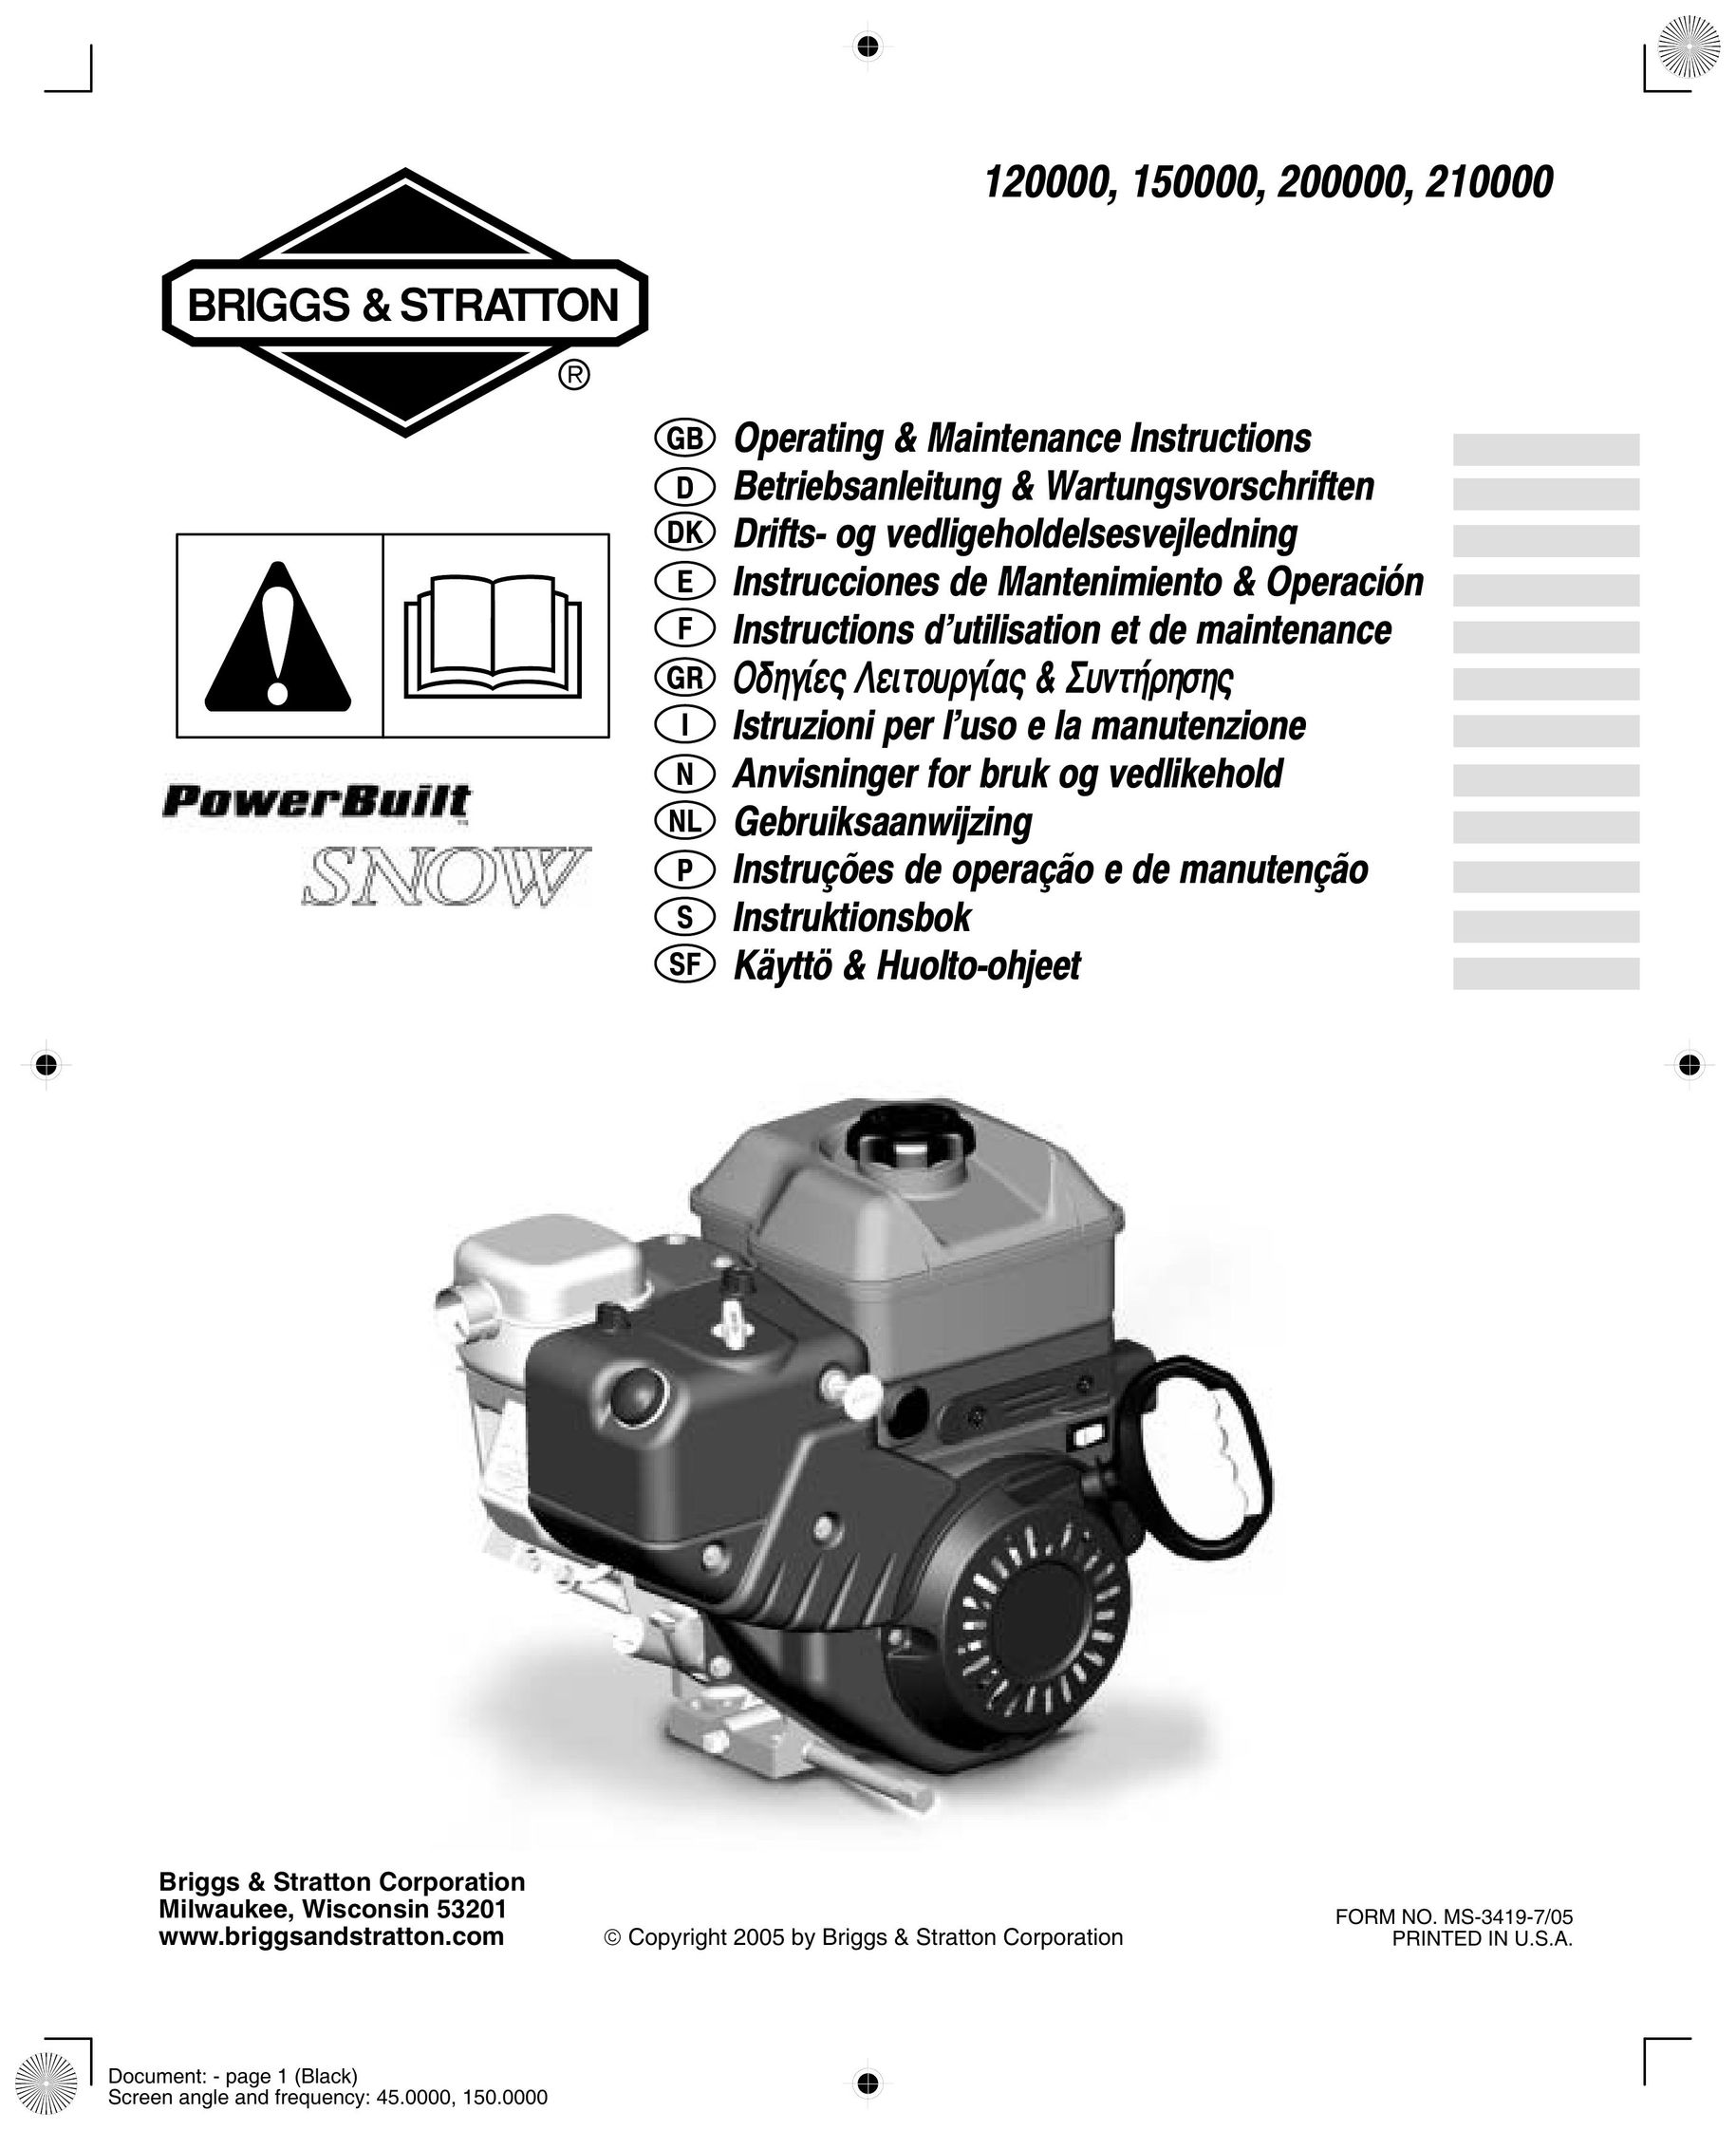 Briggs & Stratton 150000 Car Video System User Manual